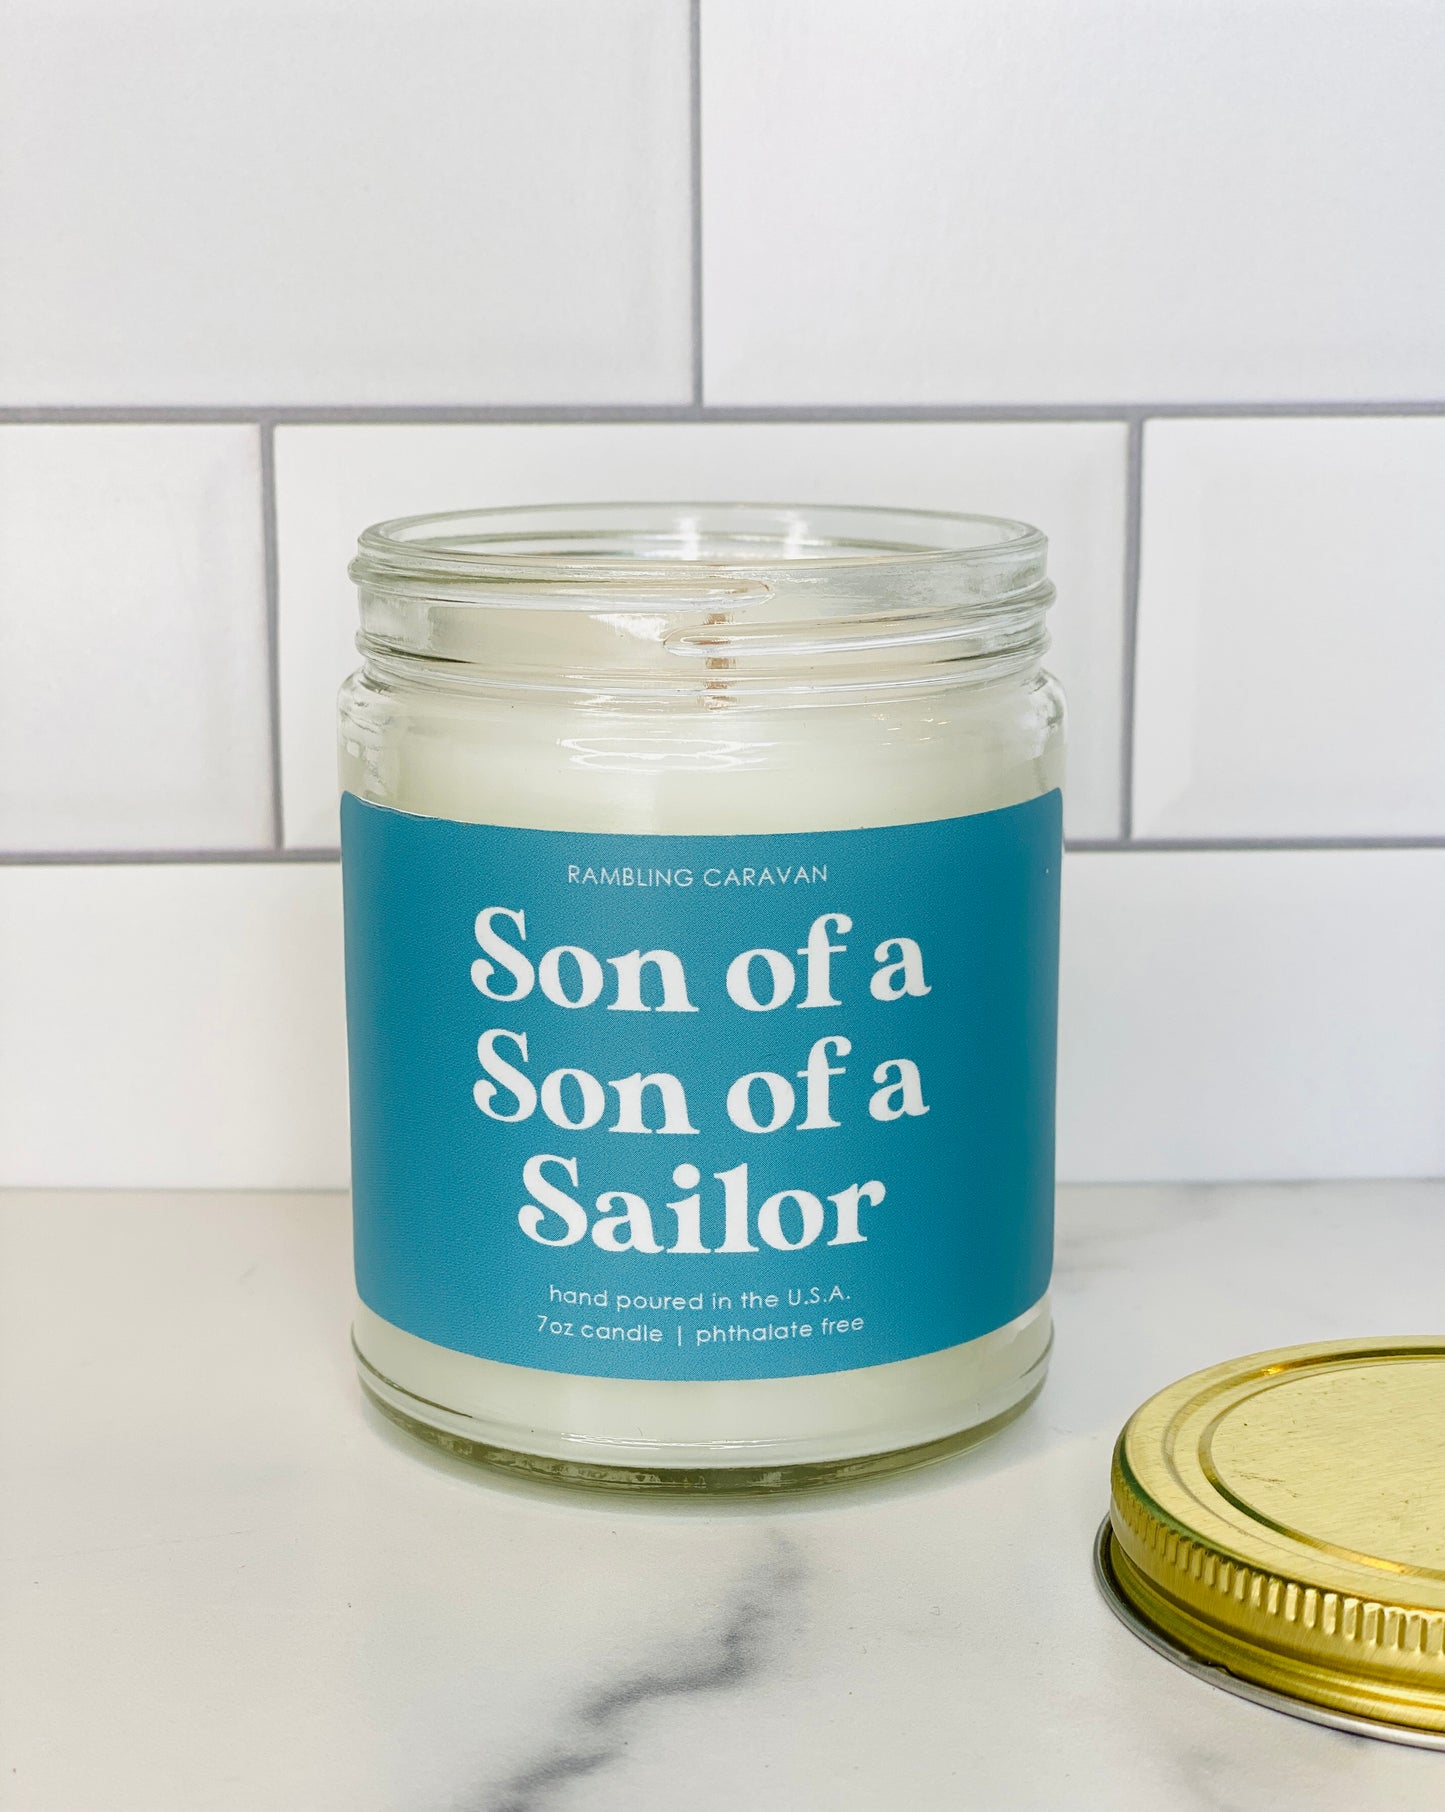 Son of a Son of a Sailor Candle